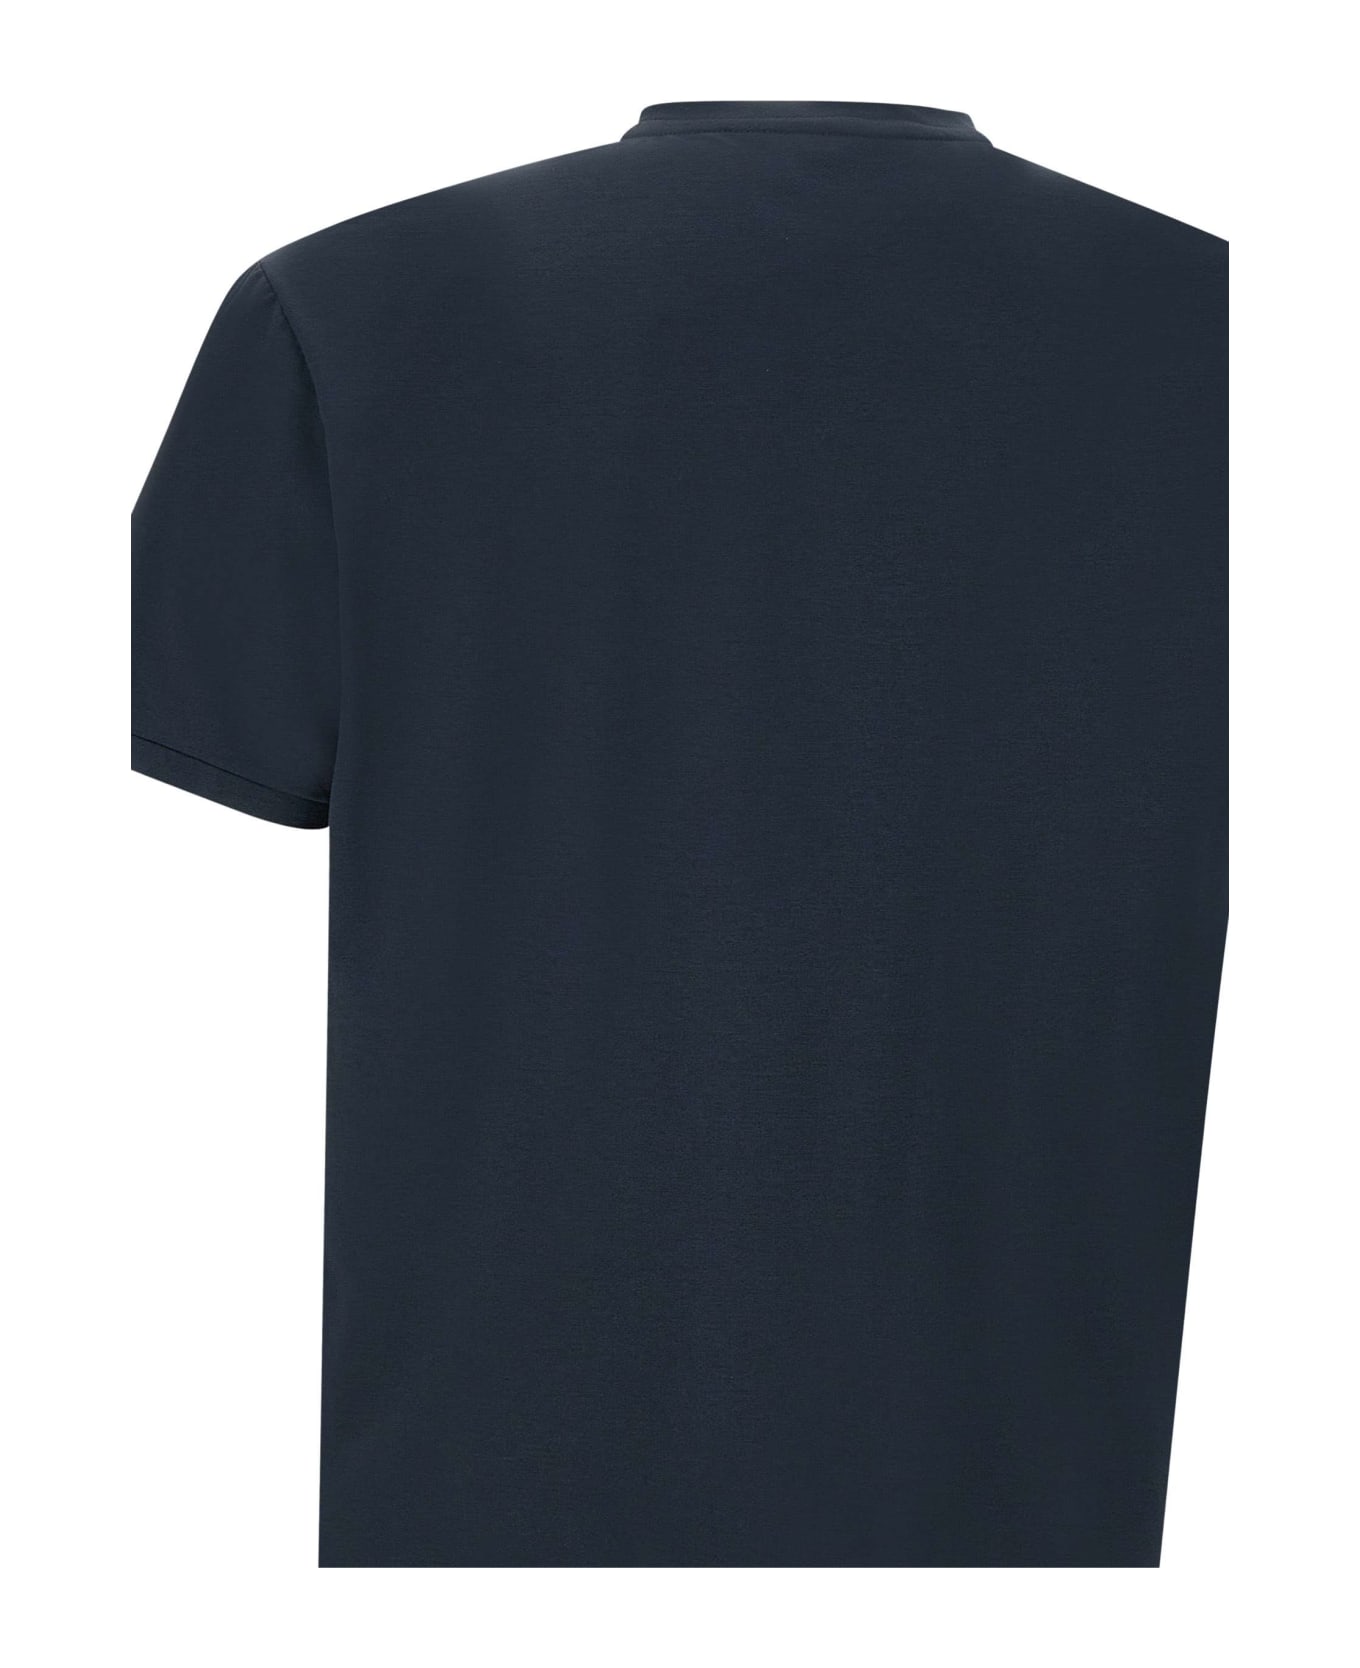 RRD - Roberto Ricci Design "summer Smart" T-shirt - BLUE